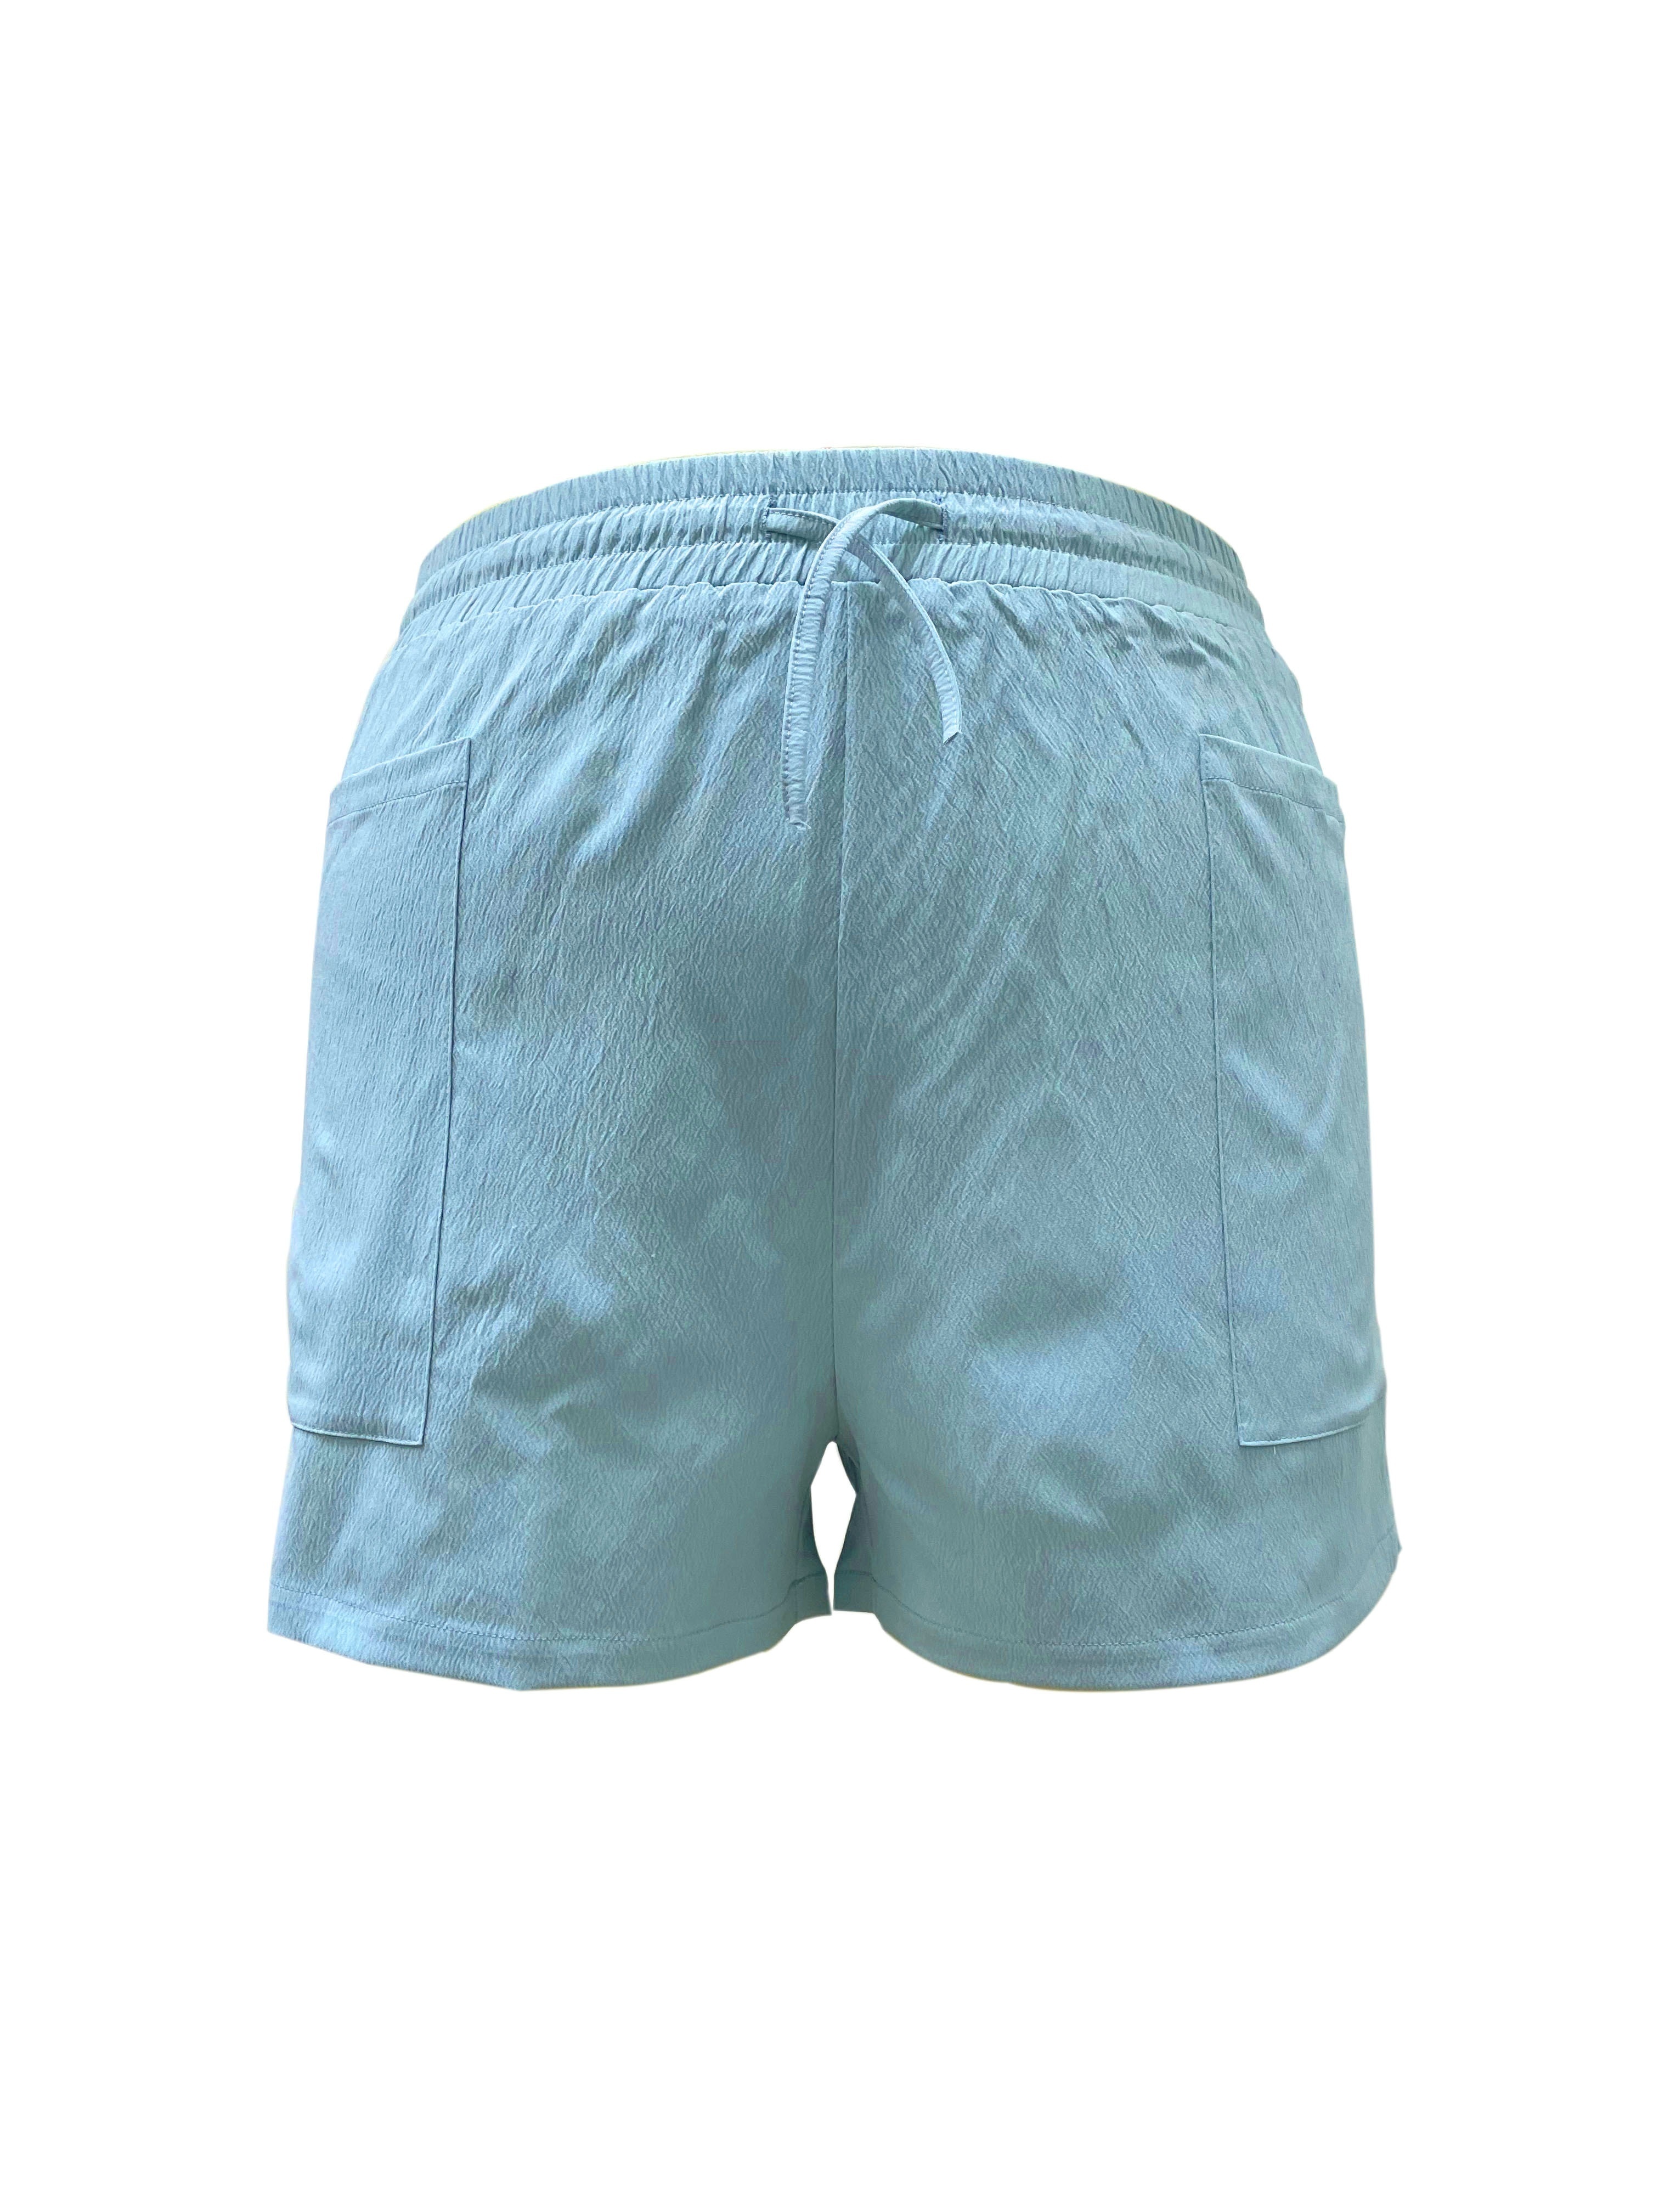 Jsezml Shorts for Women Trendy Drawstring Elastic High Waist Sweat Shorts  Plus Size Casual Summer Baggy Shorts 